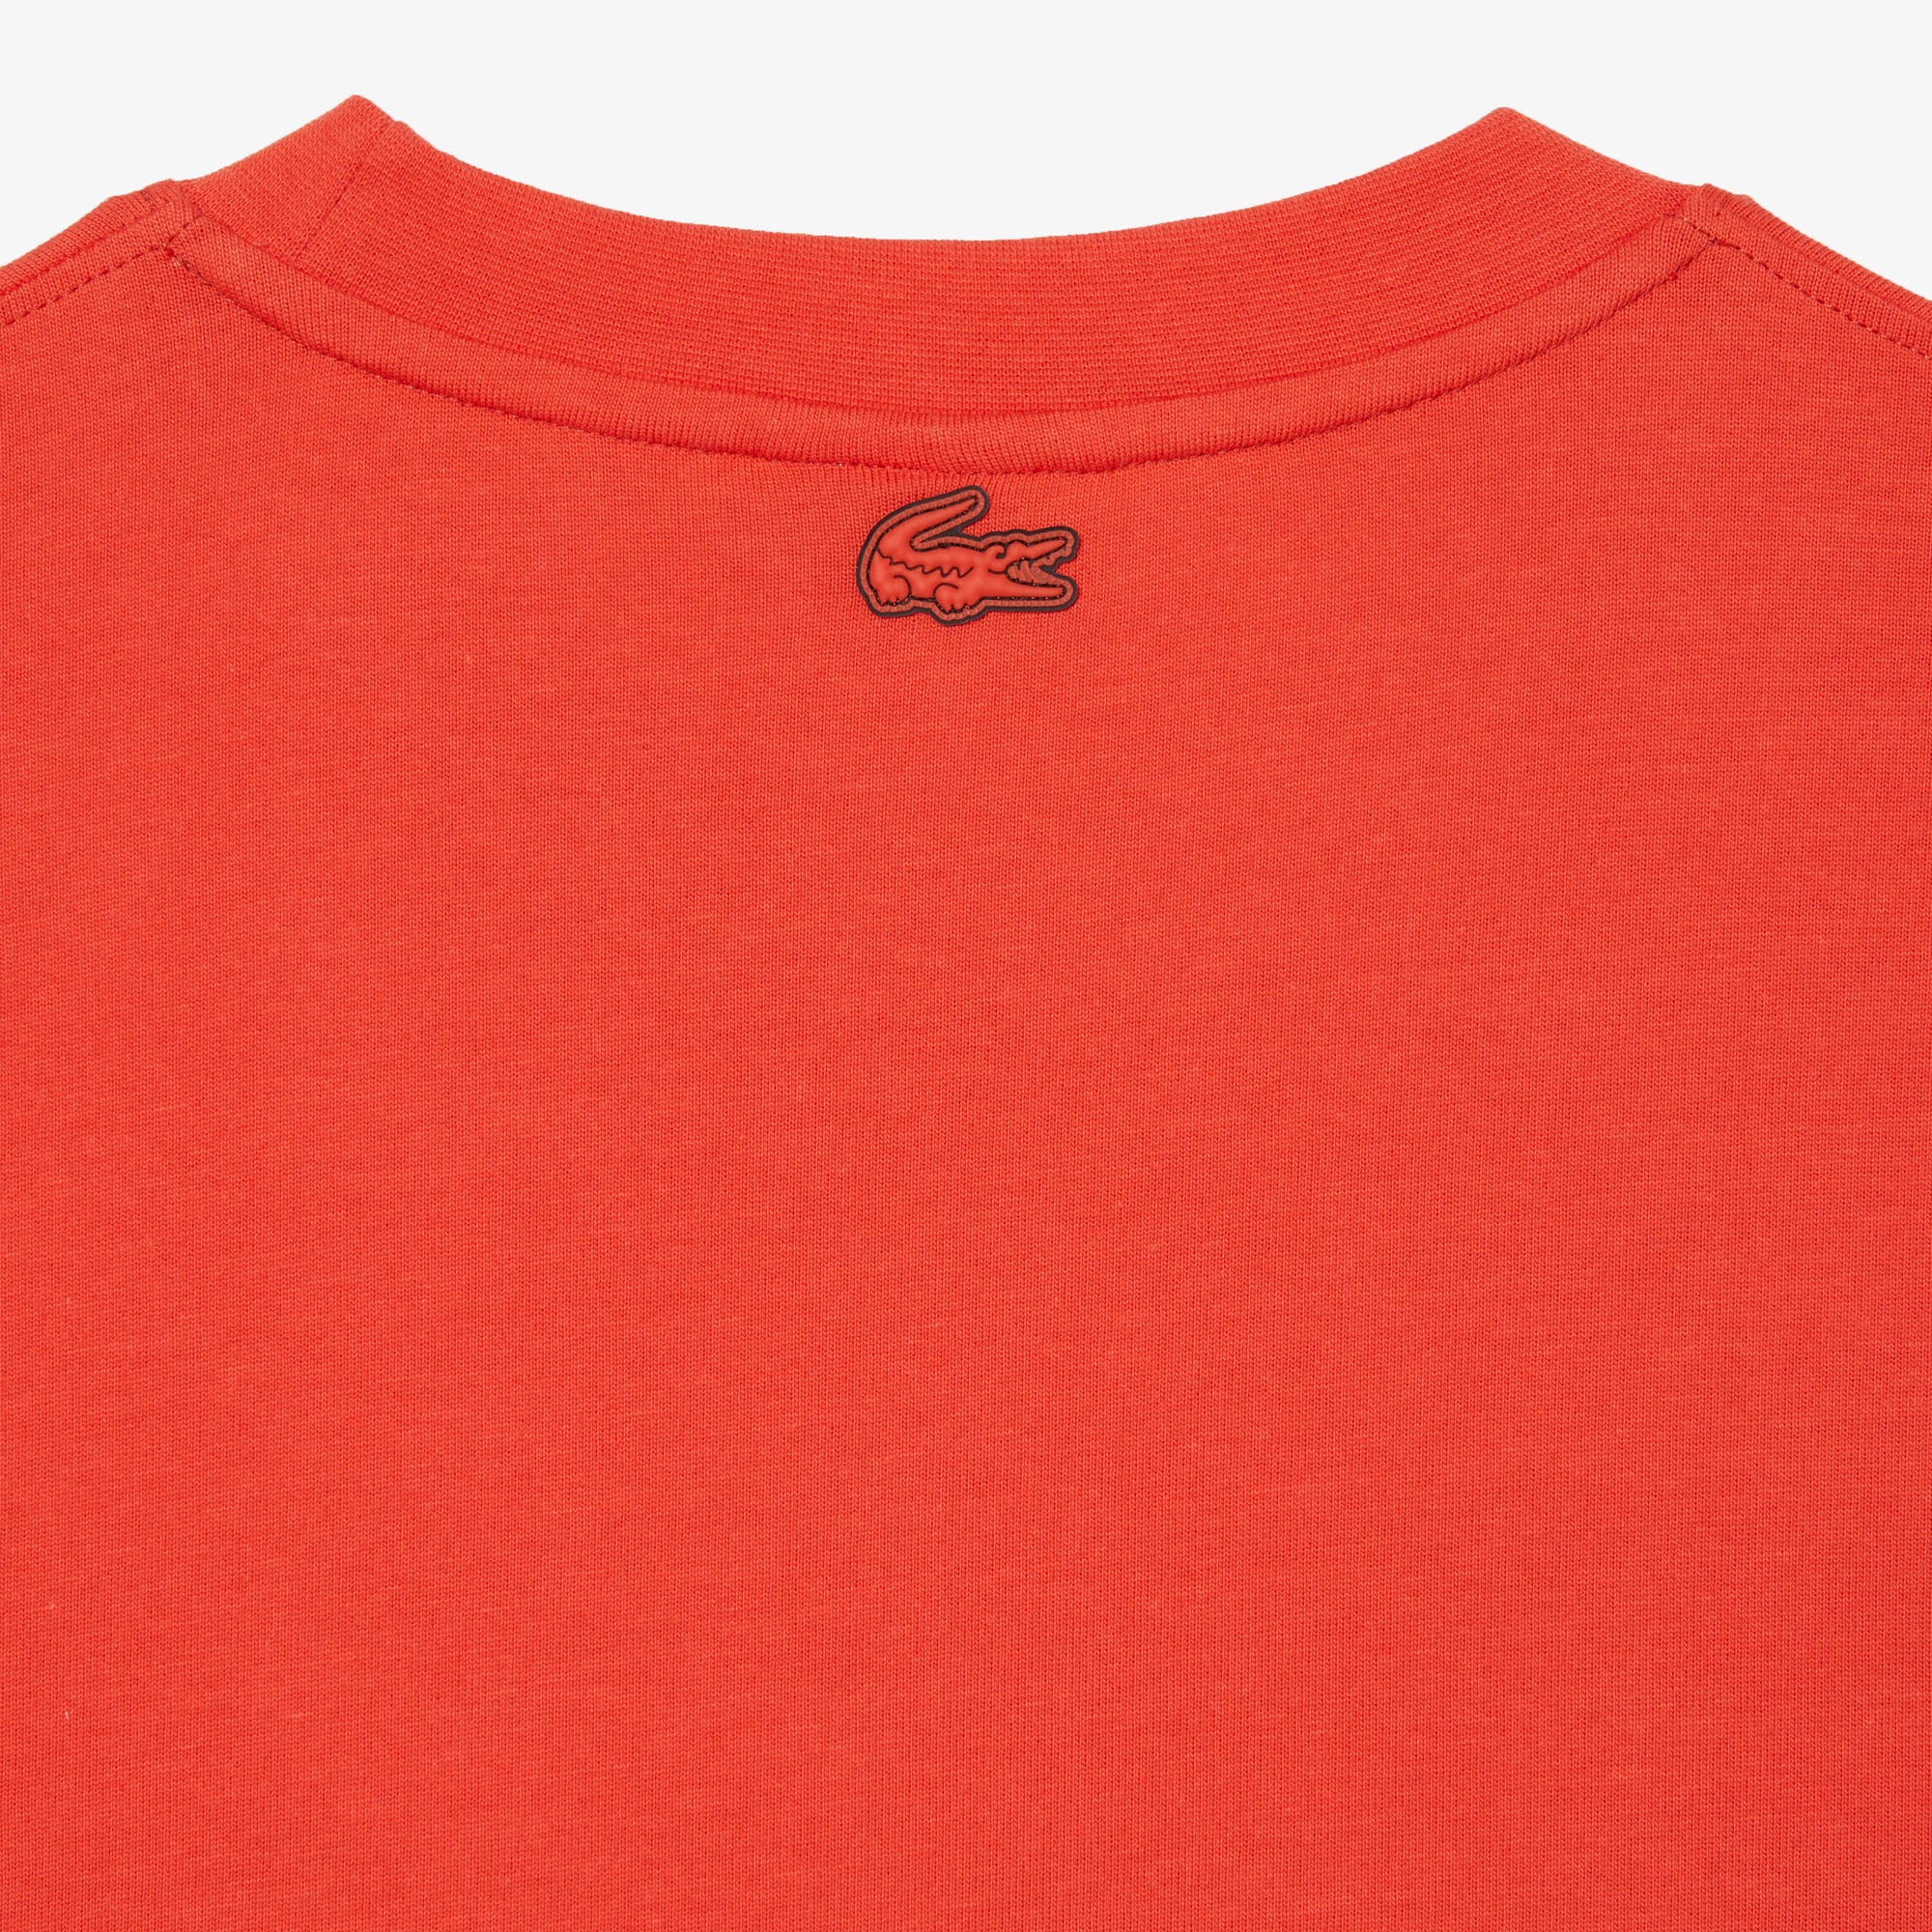 Lacoste Mens Loose Fit Cotton Jersey Print T-Shirt Watermelon TH5565 02K